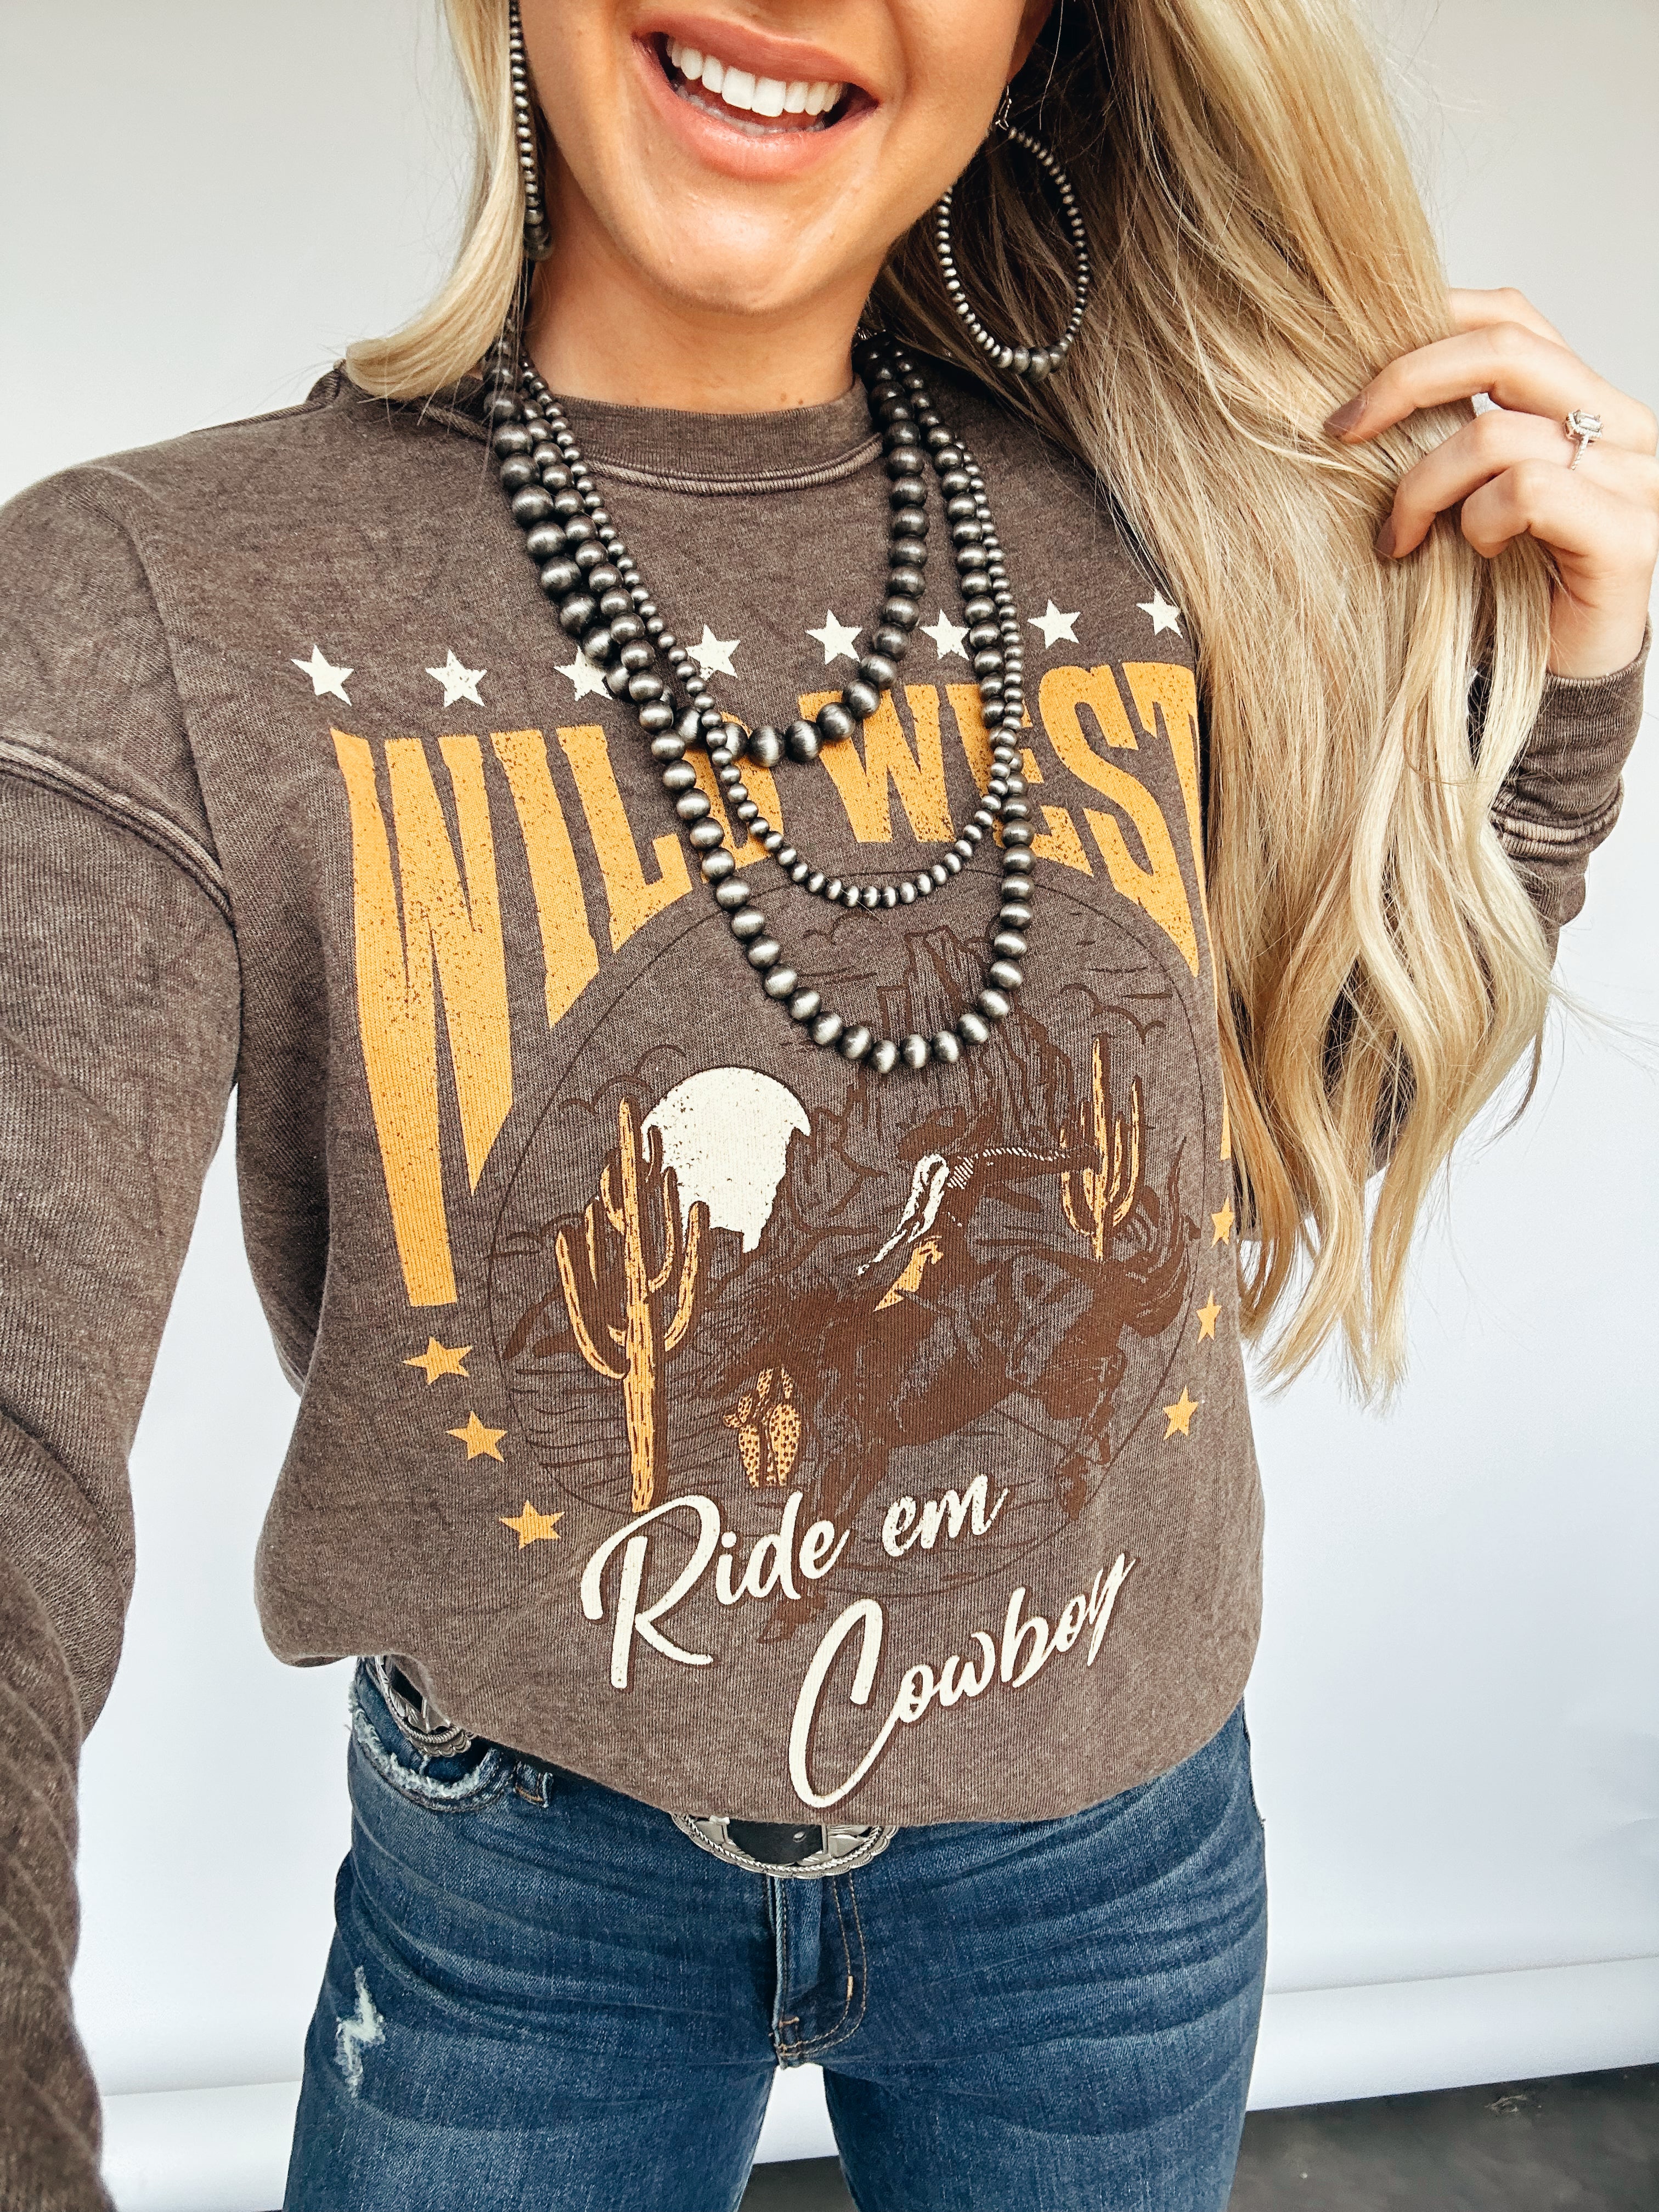 Ride em Cowboy Sweatshirt